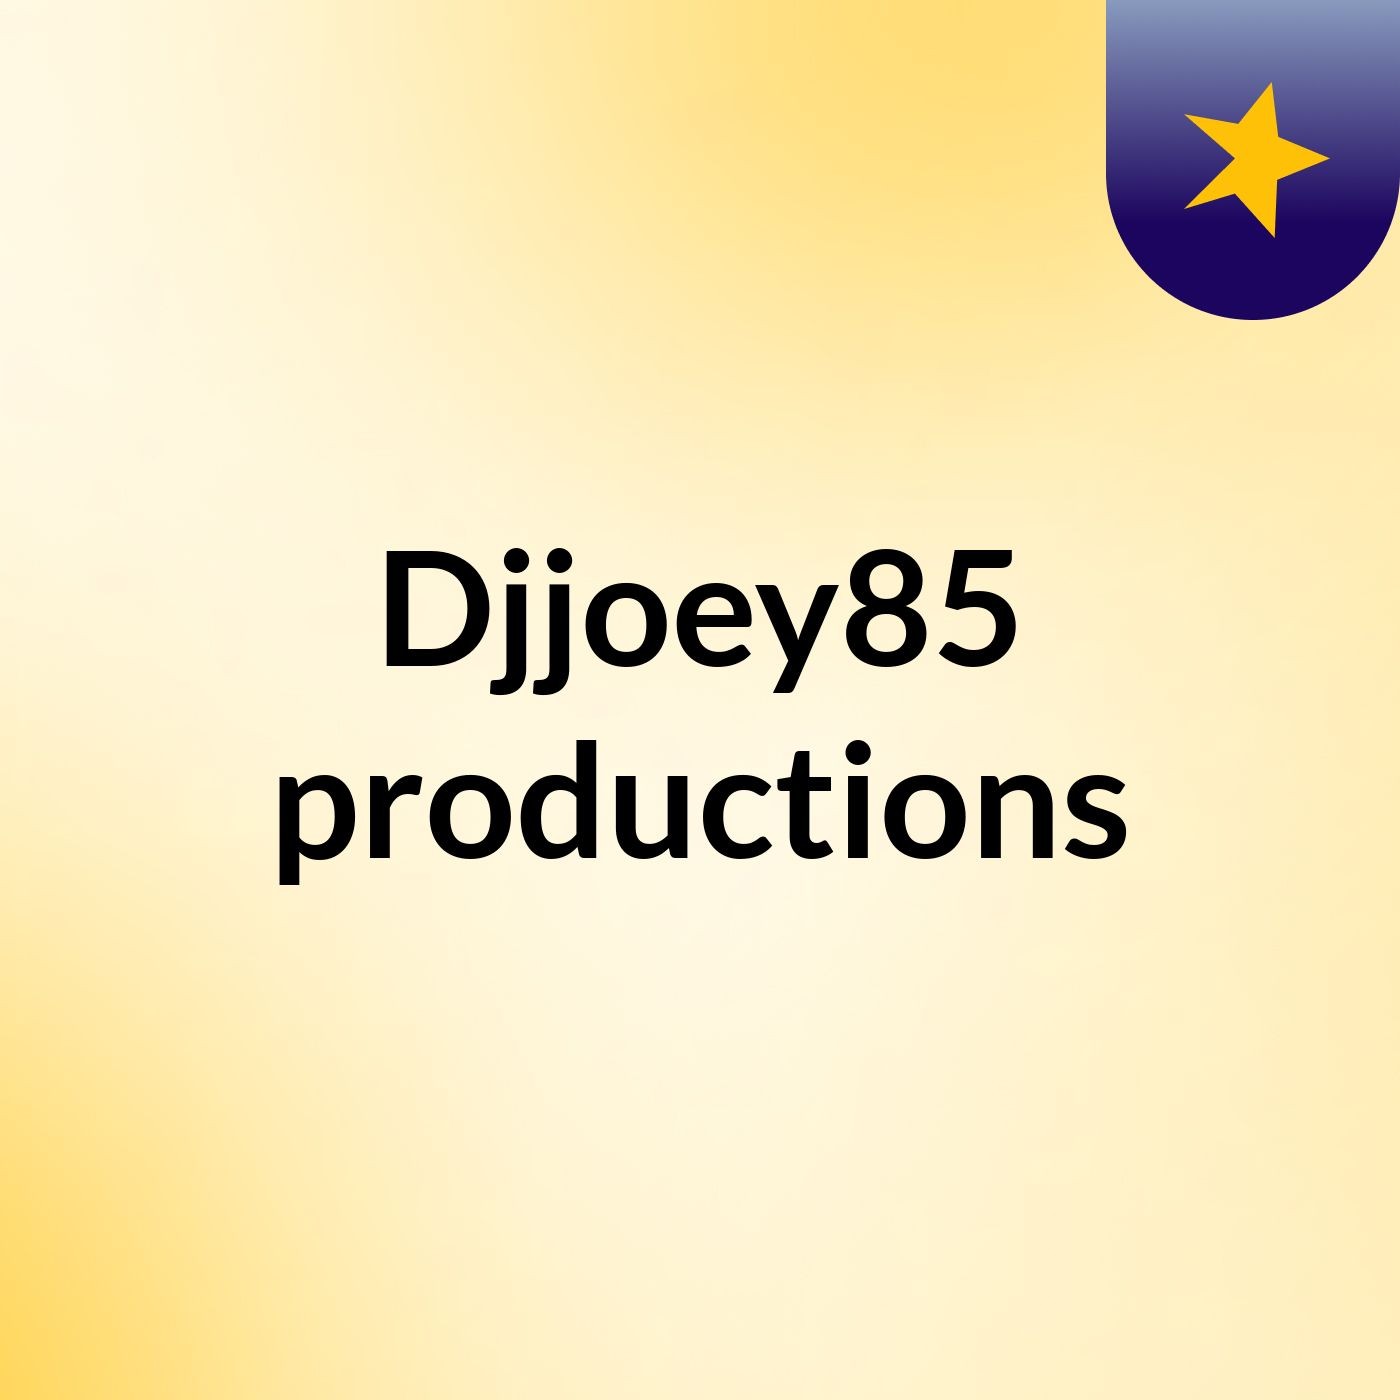 Djjoey85 productions